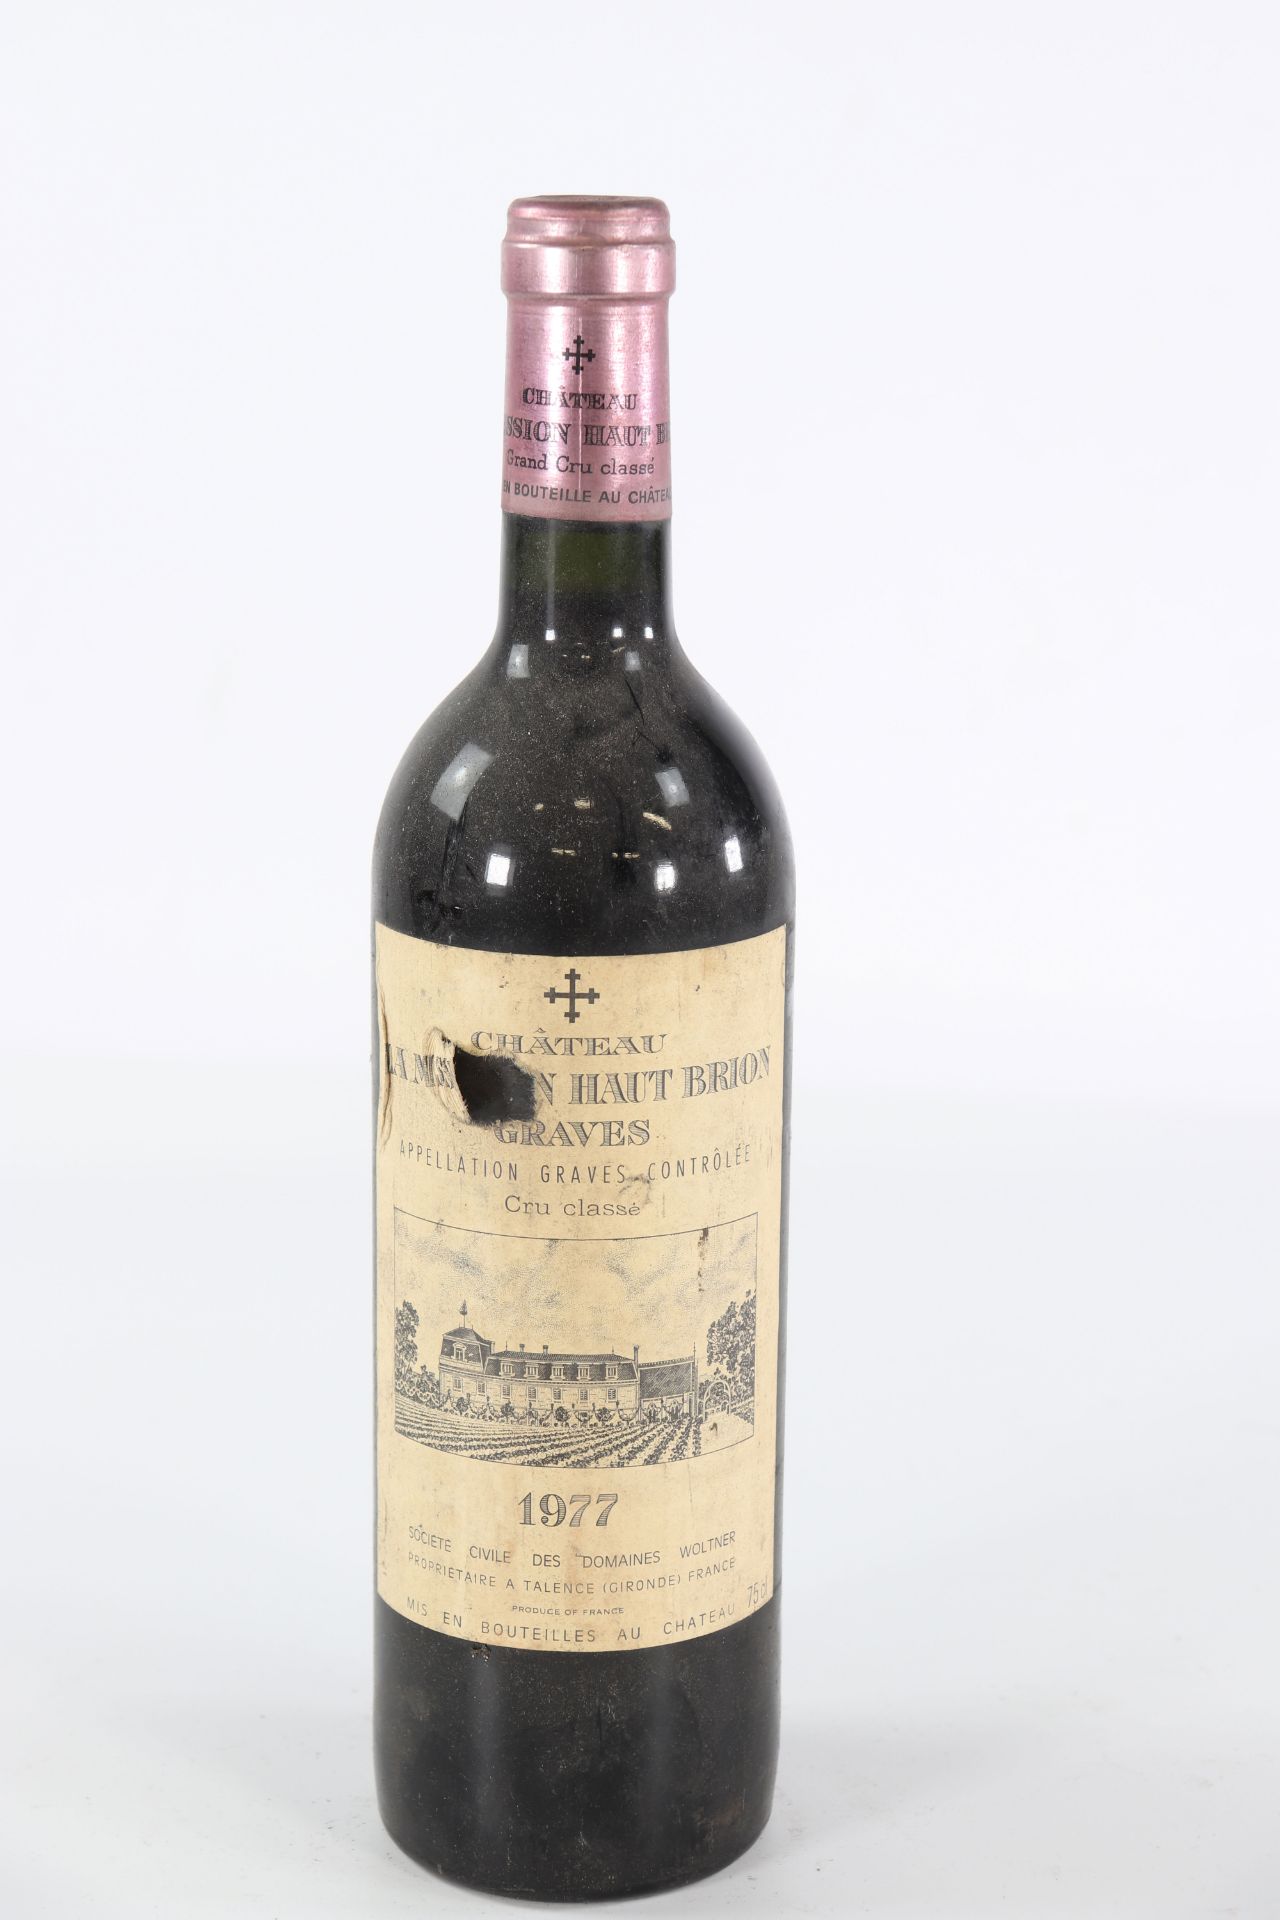 1 bottle of chateau Haut Brion - pessac Leognan - grand cru Classe GRAVES - 1977 -